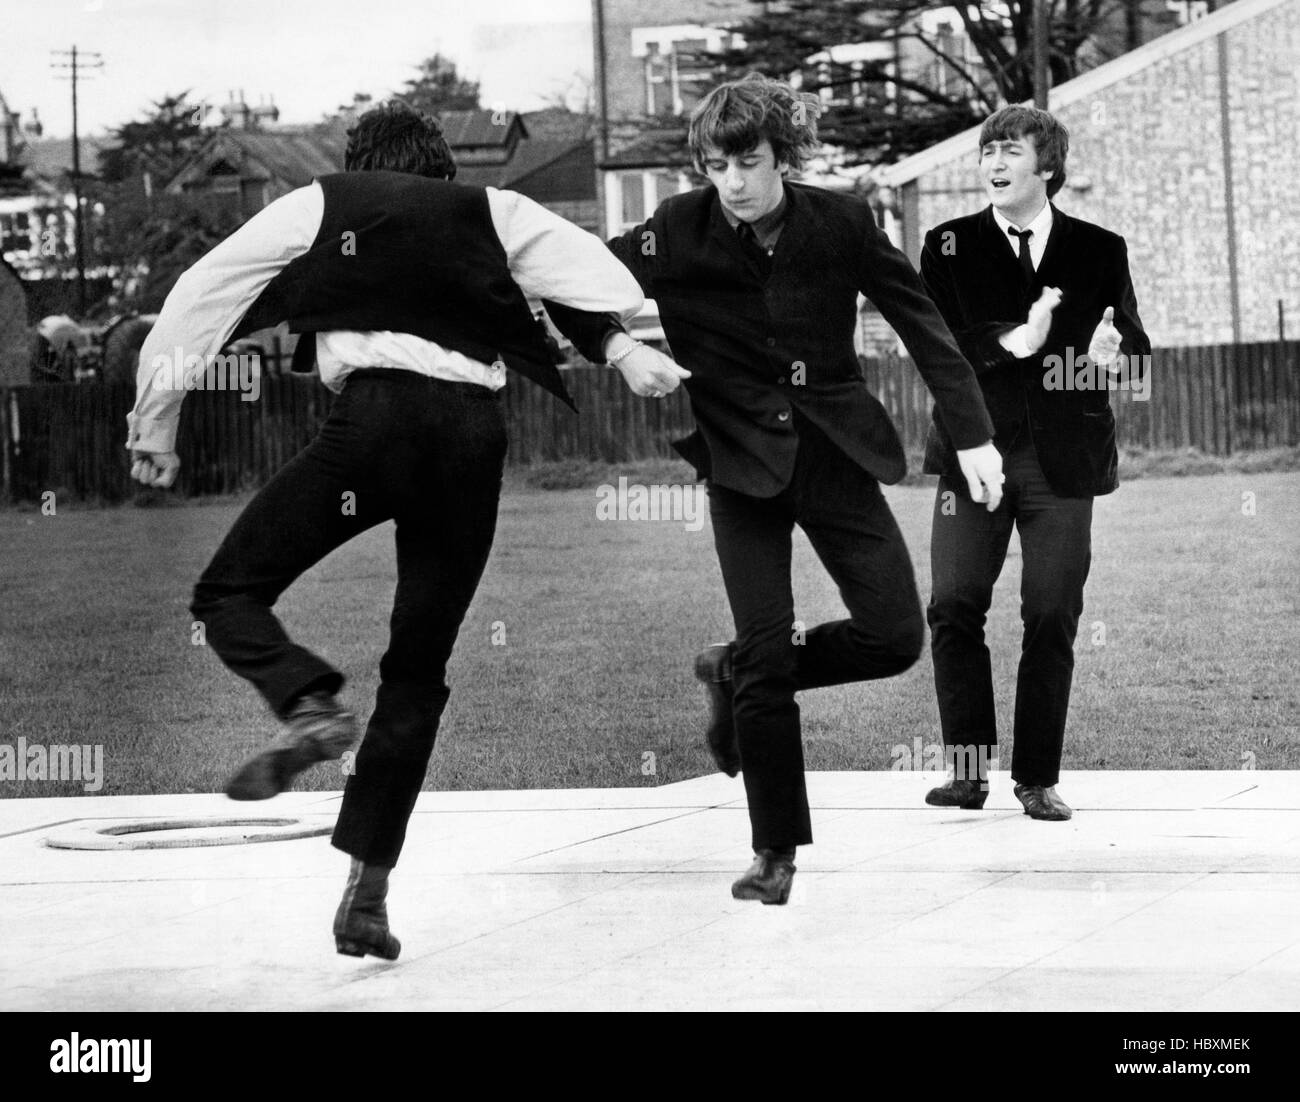 A HARD DAY NIGHT Paul McCartney Ringo Starr John Lennon Stockfotografie Alamy